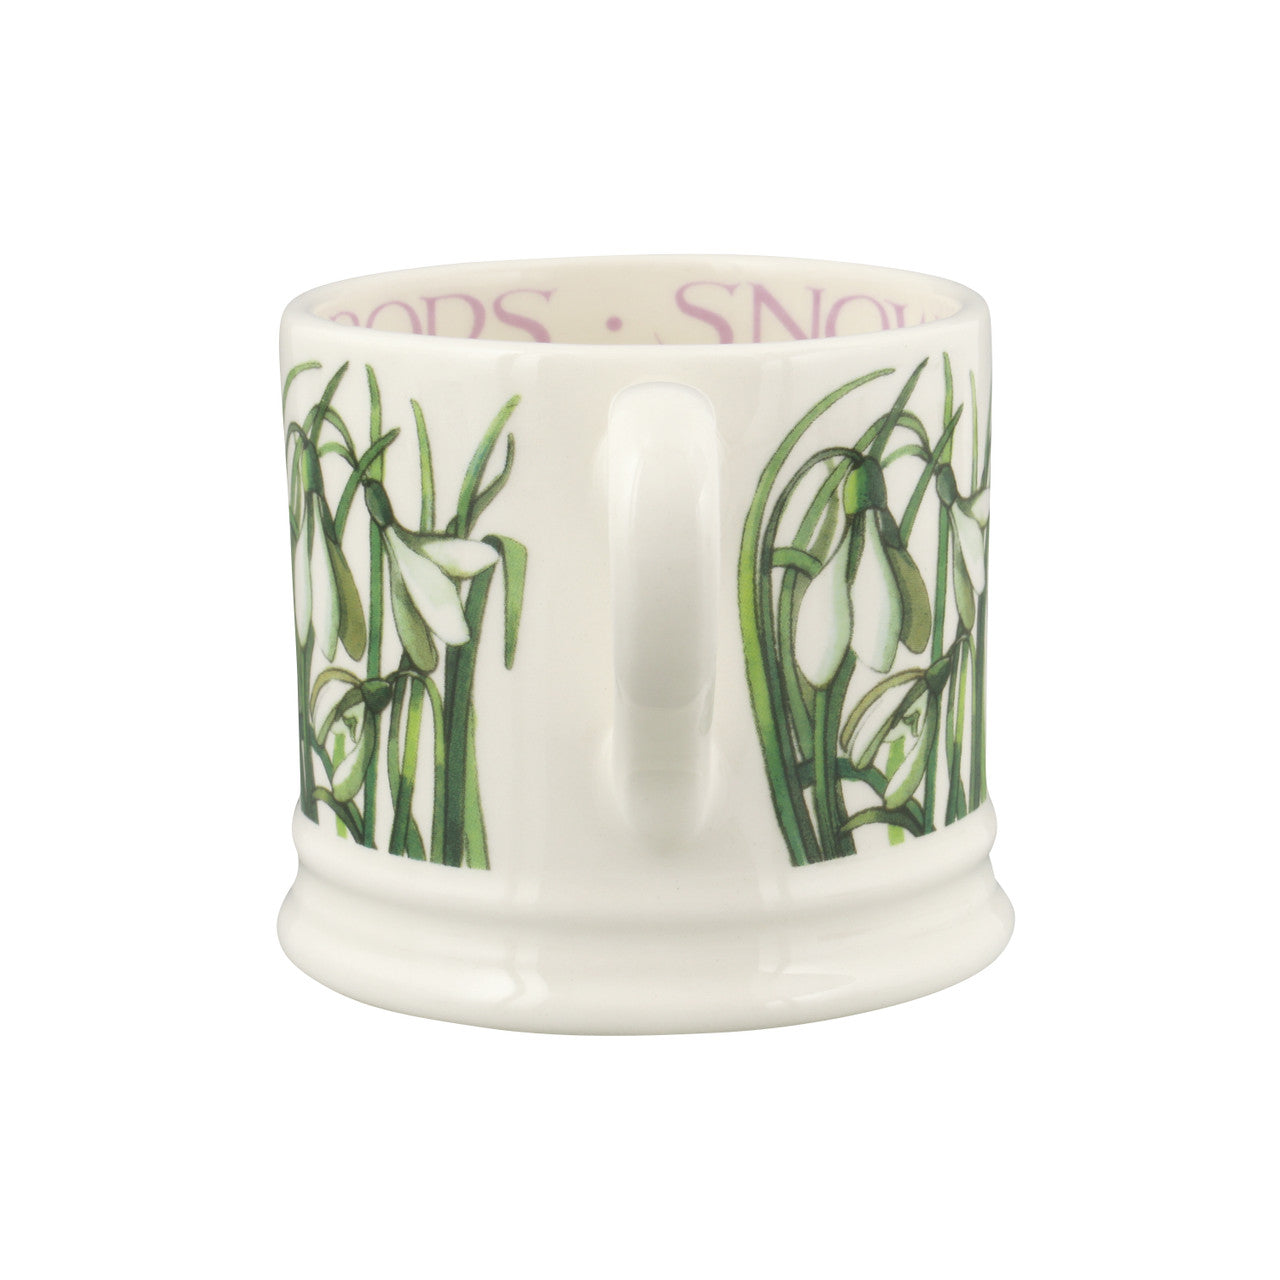 Small Snowdrop Mug by Emma Bridgewater.